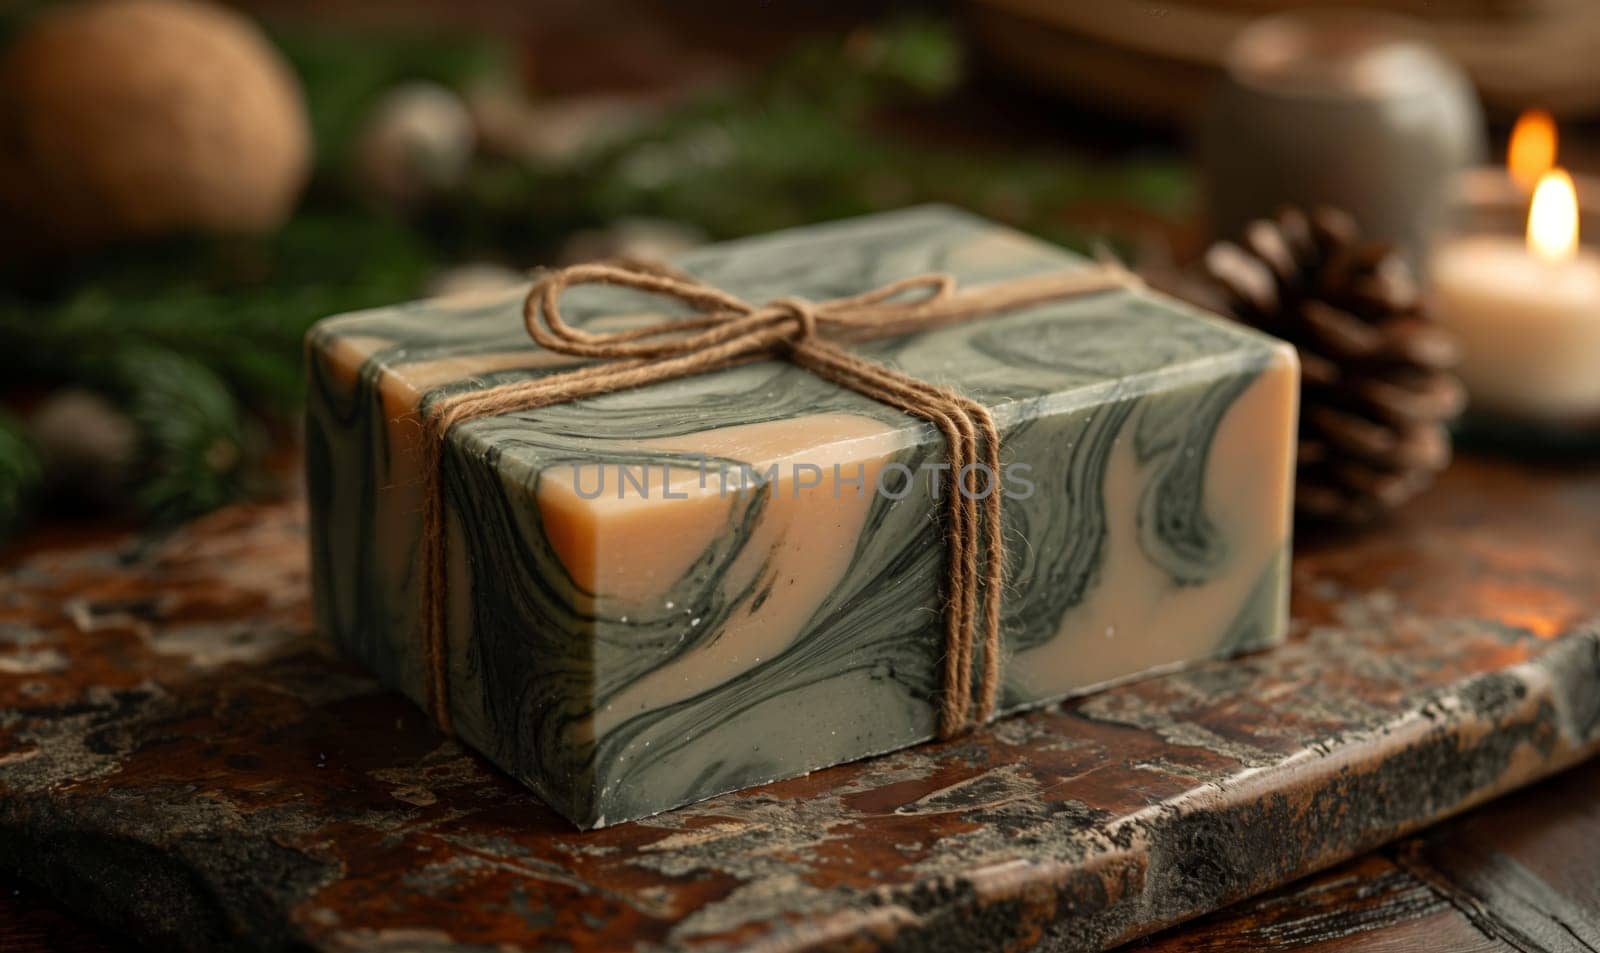 Handmade soap as a gift. Selective focus